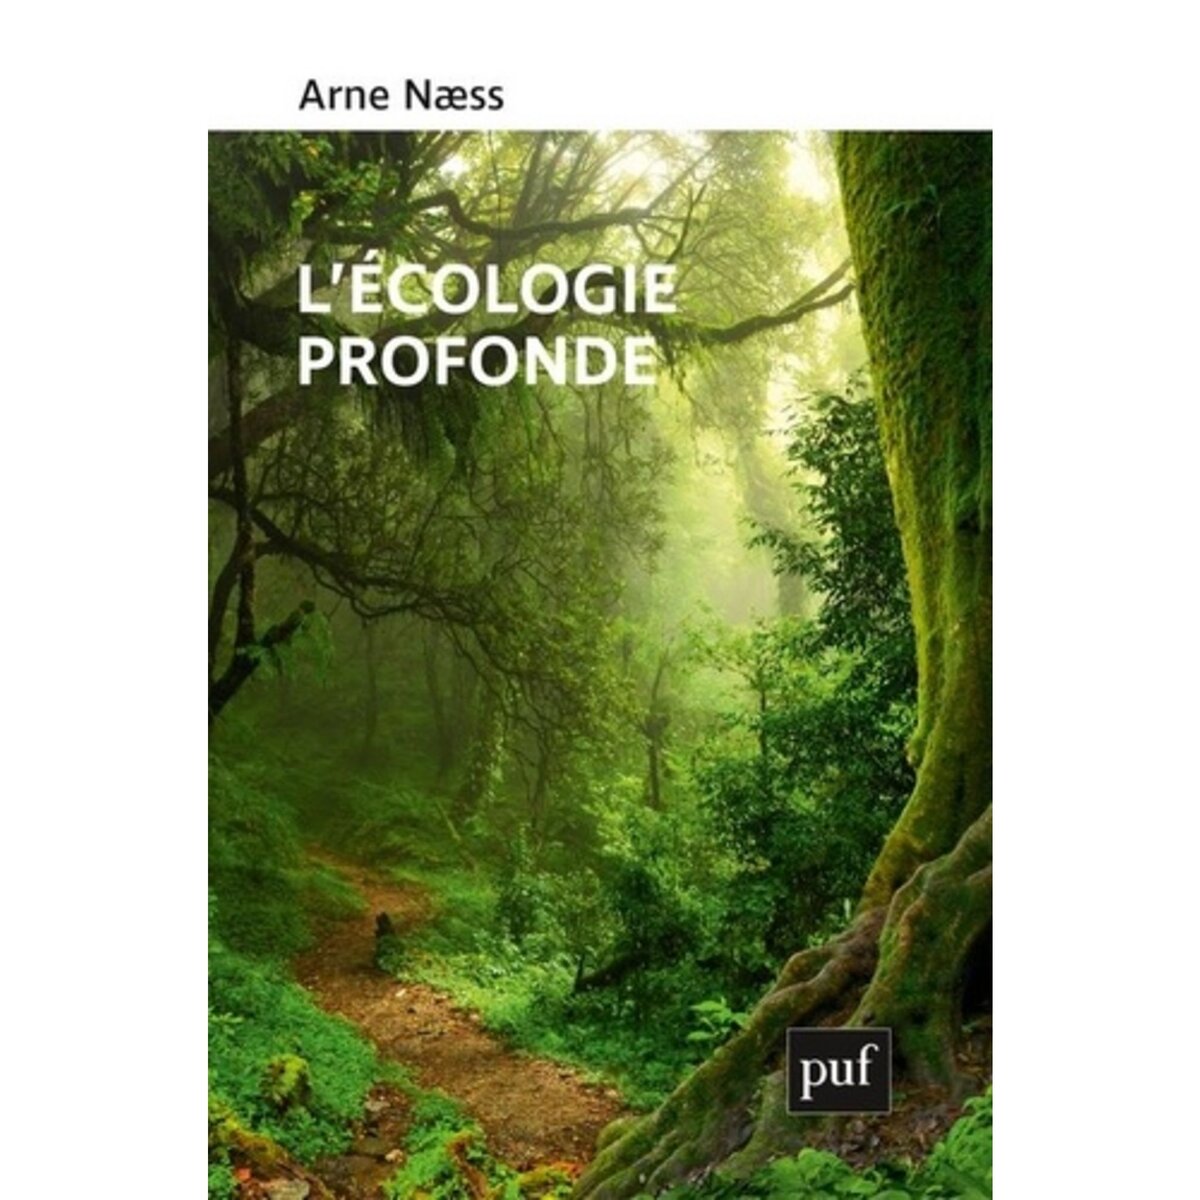  L'ECOLOGIE PROFONDE, Naess Arne